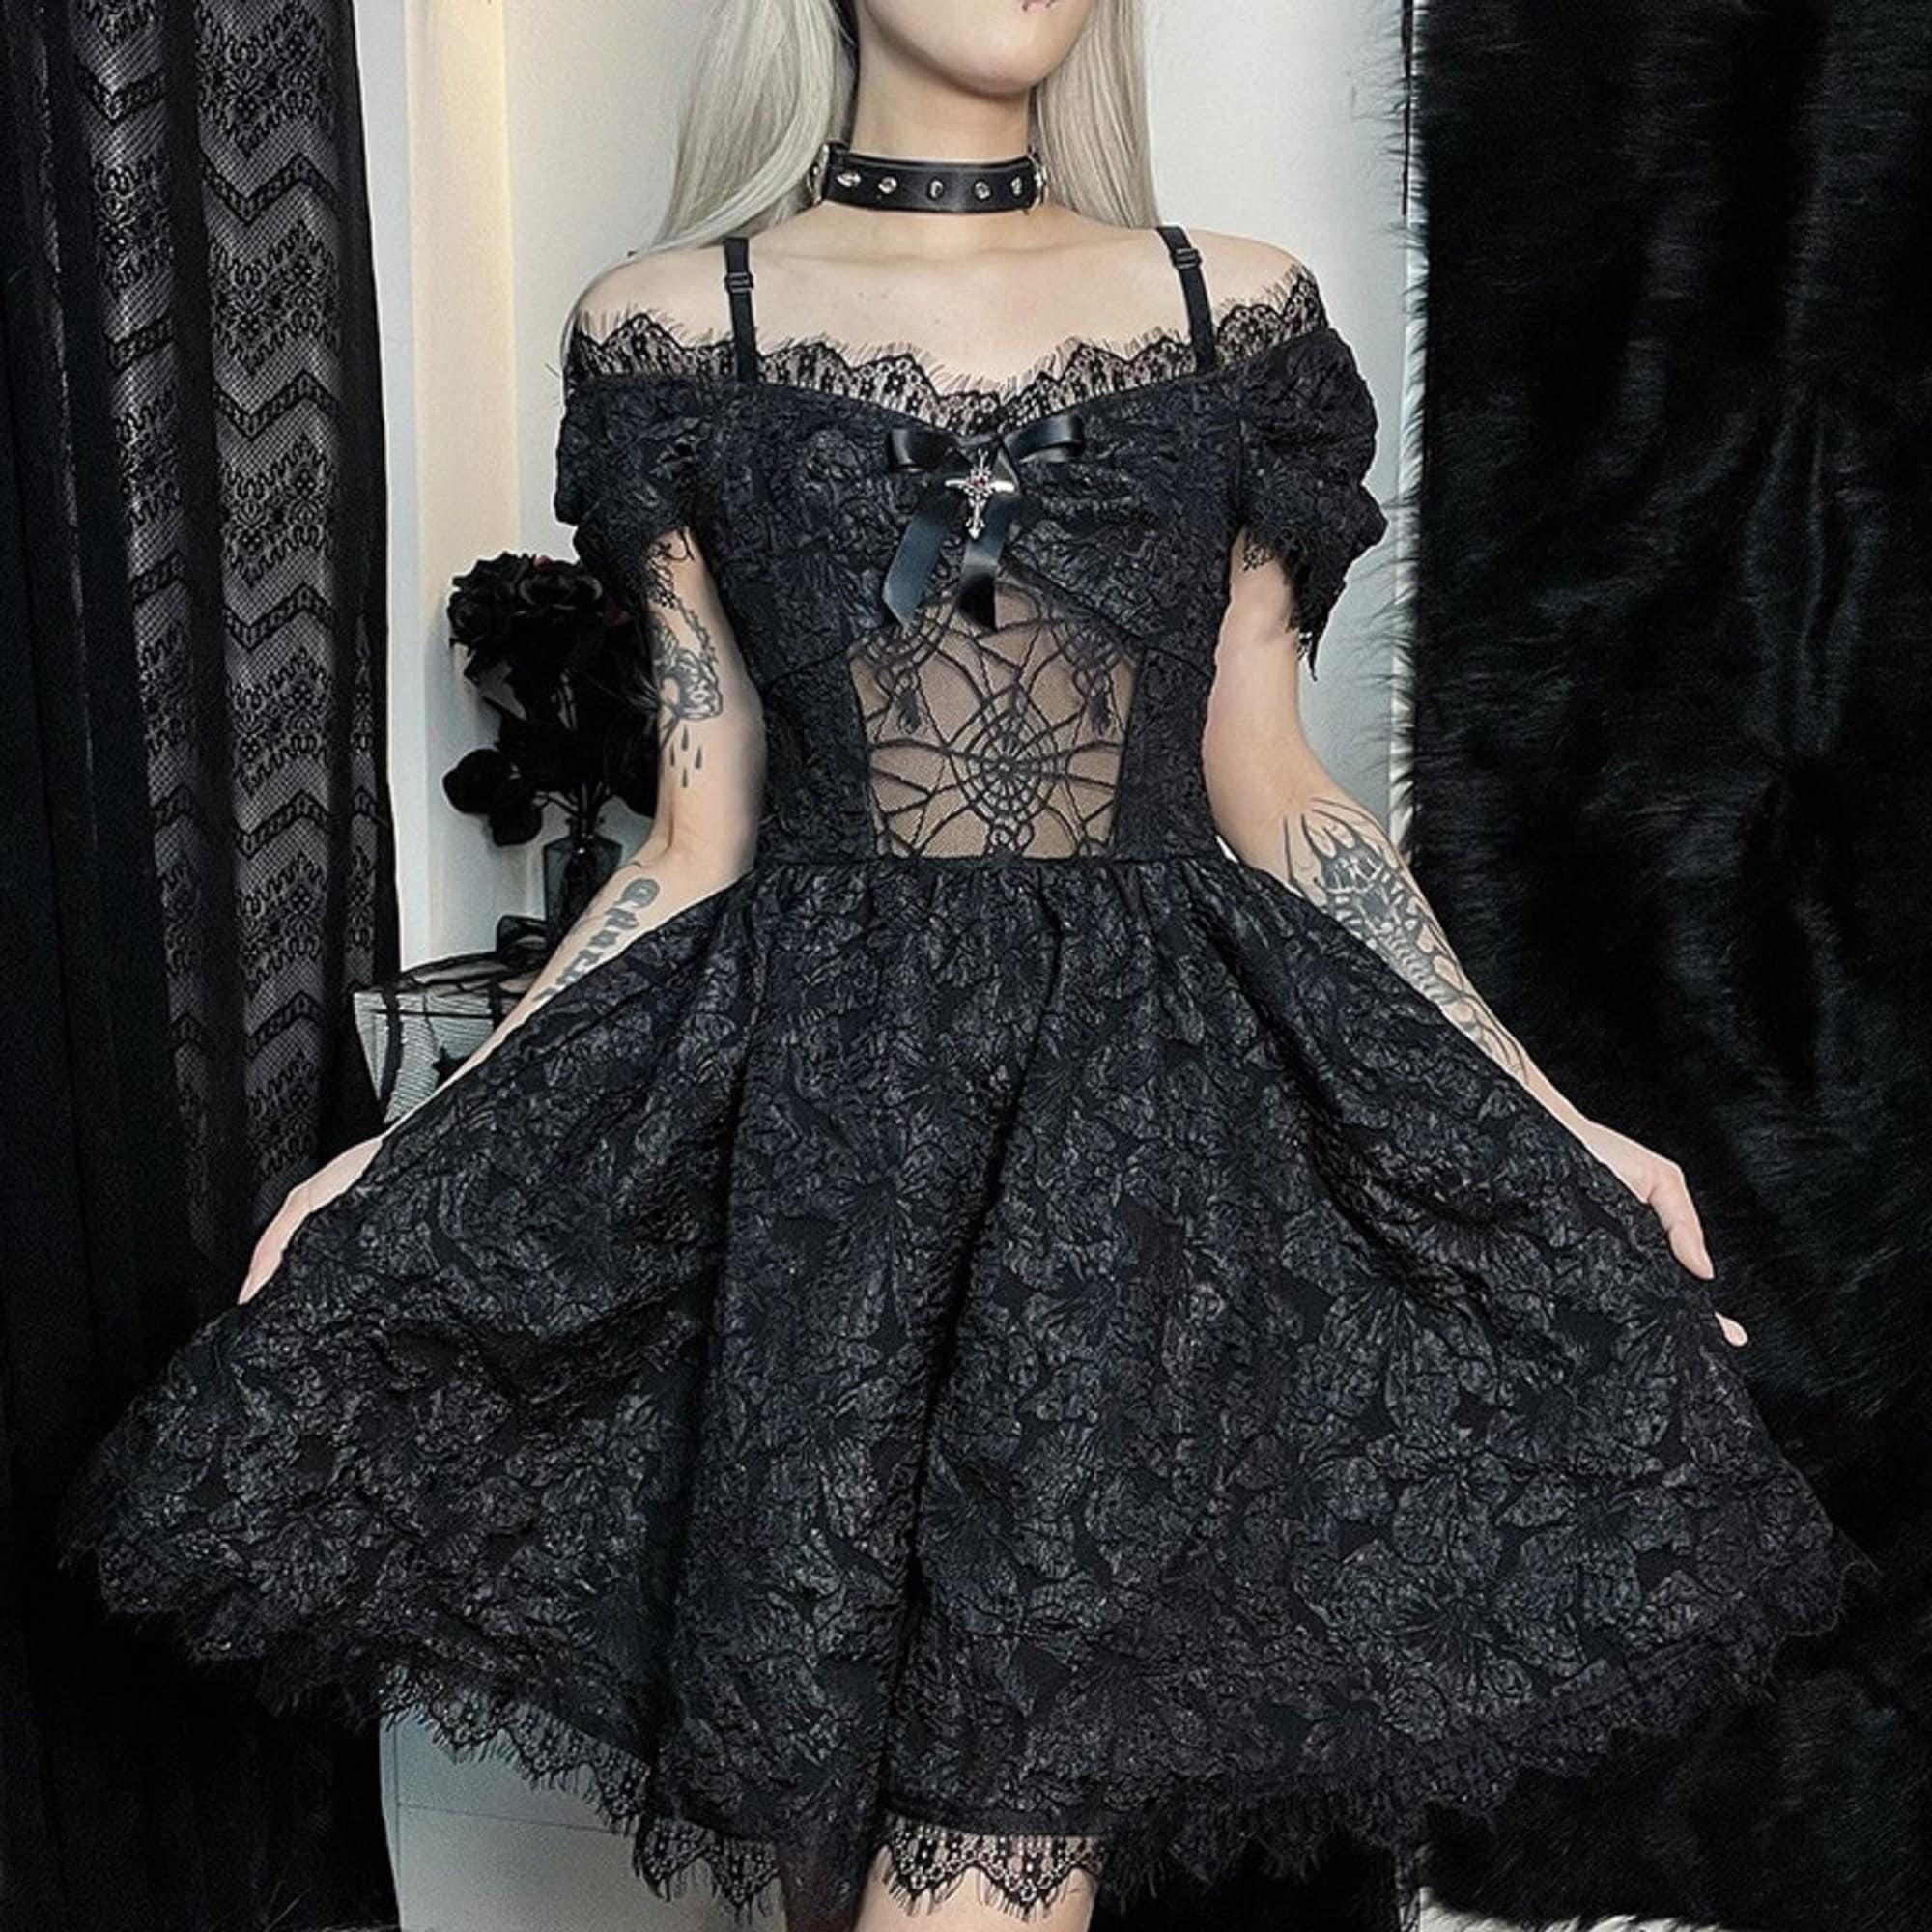 Lace Mini Sleeveless Dress Black Lace Draped Bodycon Gothic Summer Dress Gothic Vintage Goth Dresses 